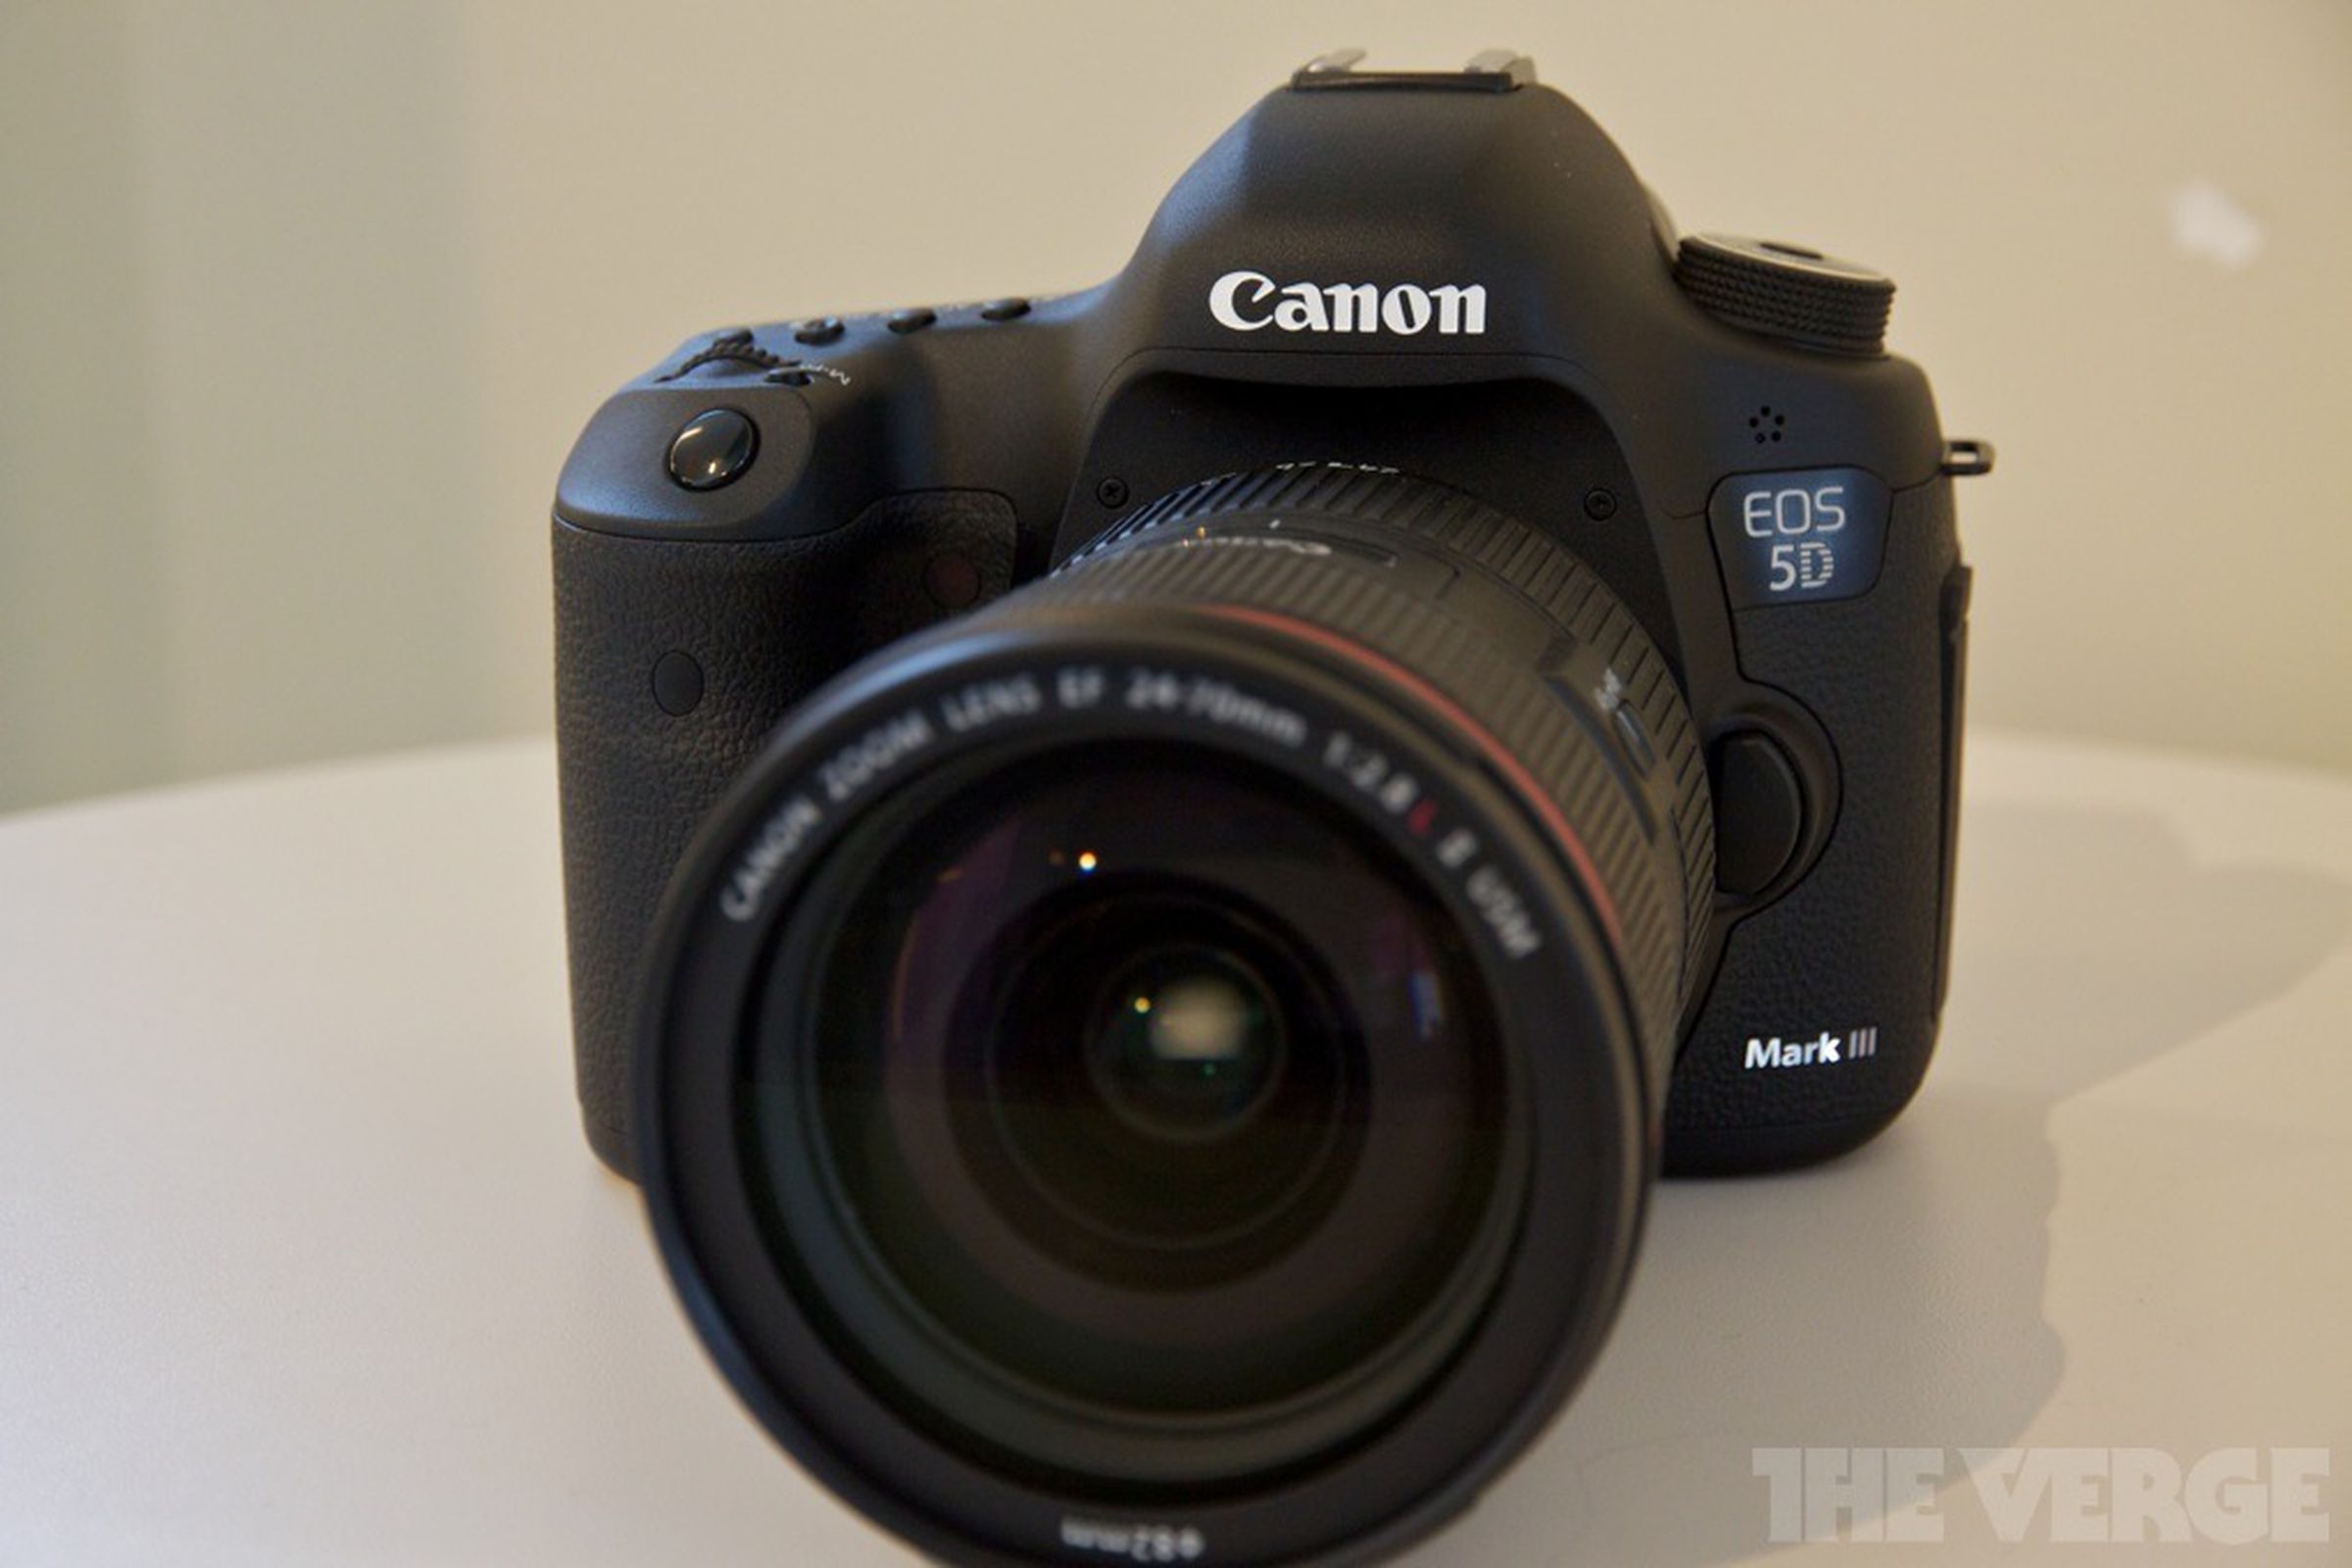 Gallery Photo: Canon EOS 5D Mark III hands-on photos